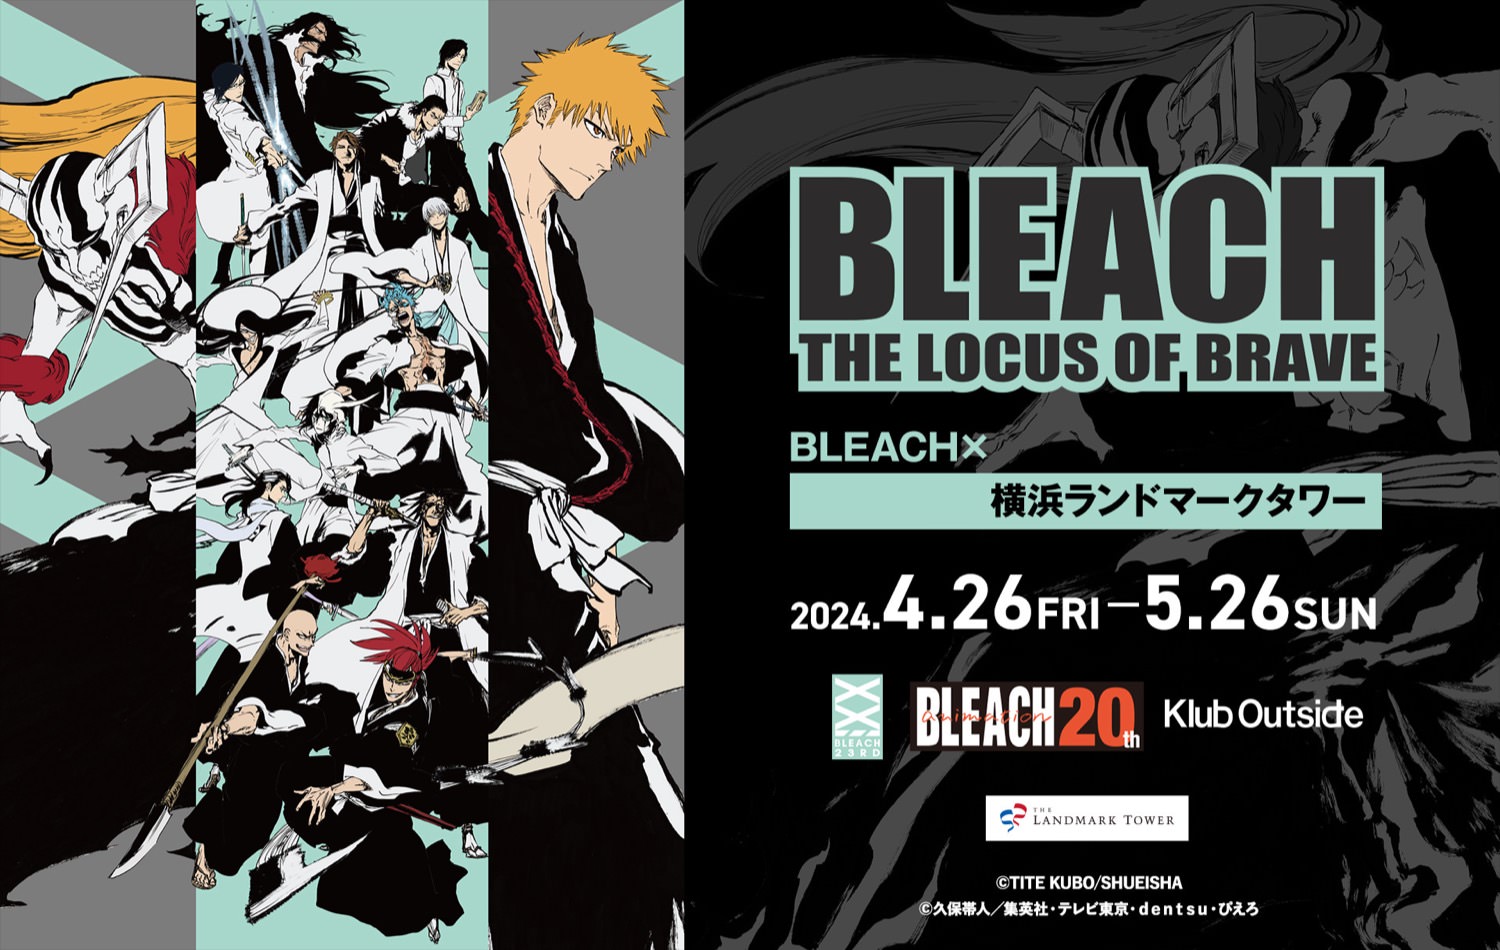 TVアニメ「BLEACH 」20周年展 in 横浜 4月26日より開催!